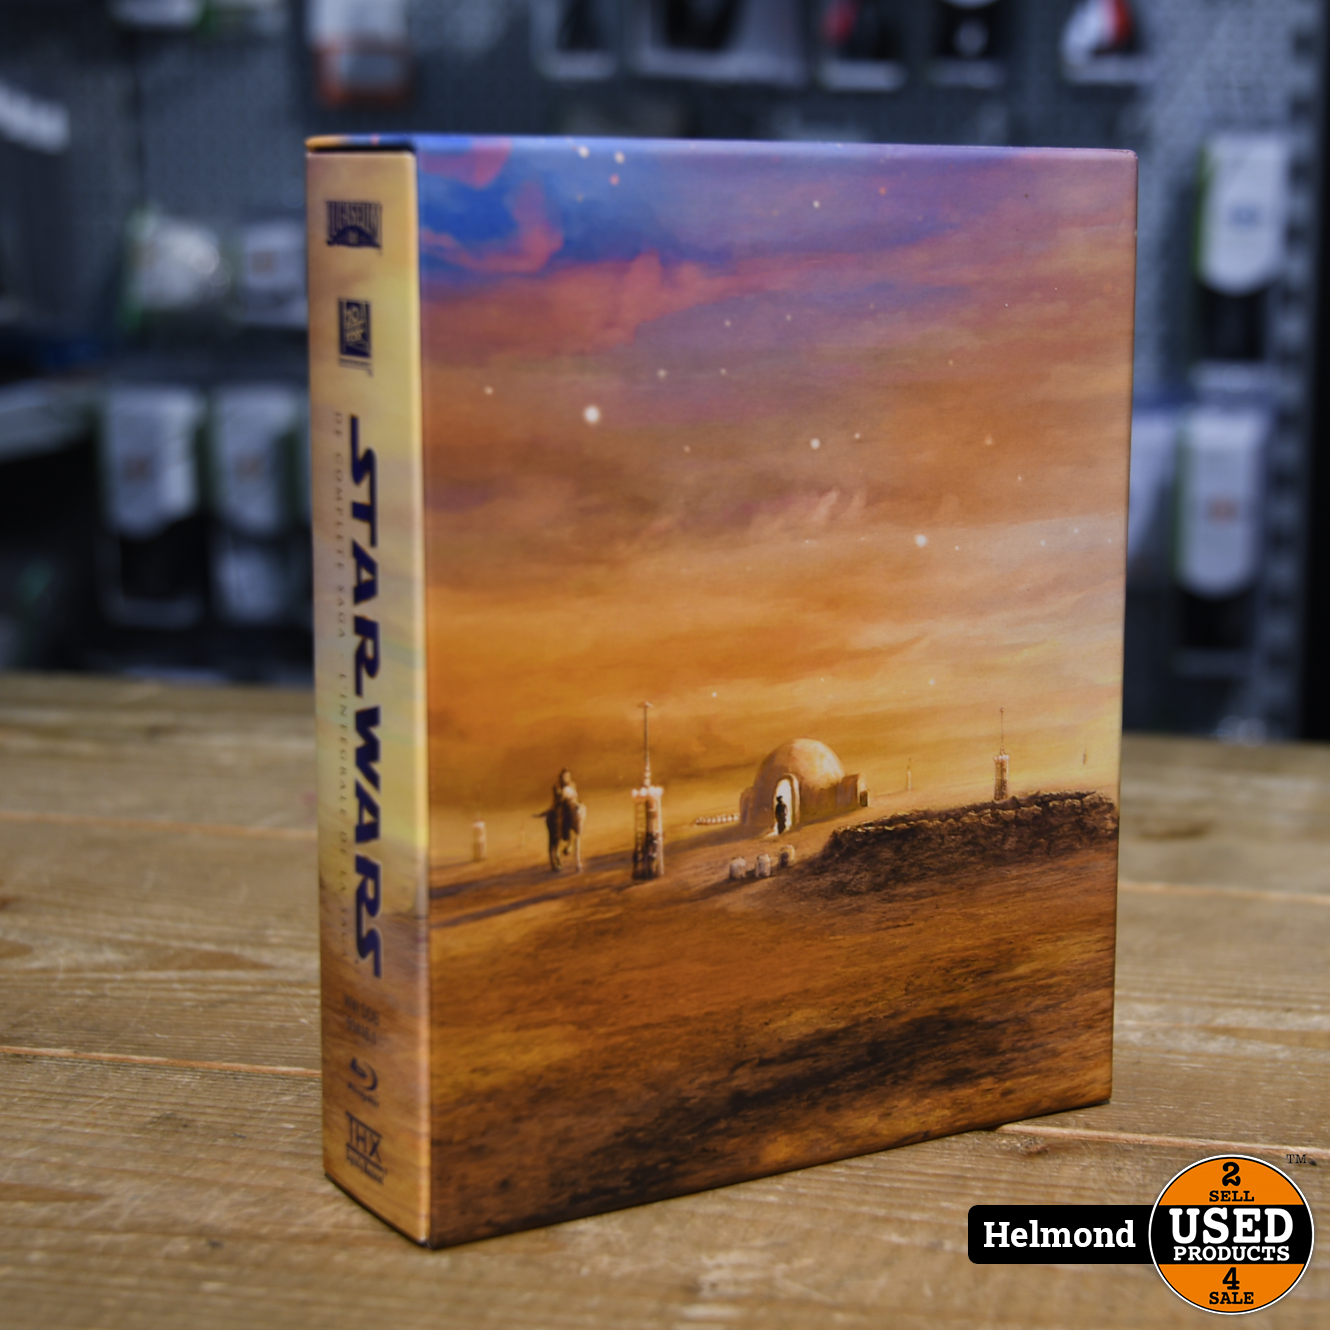 Productiviteit Wees bladerdeeg Blu-Ray: Star War De Complete Saga | ZGAN - Used Products Helmond